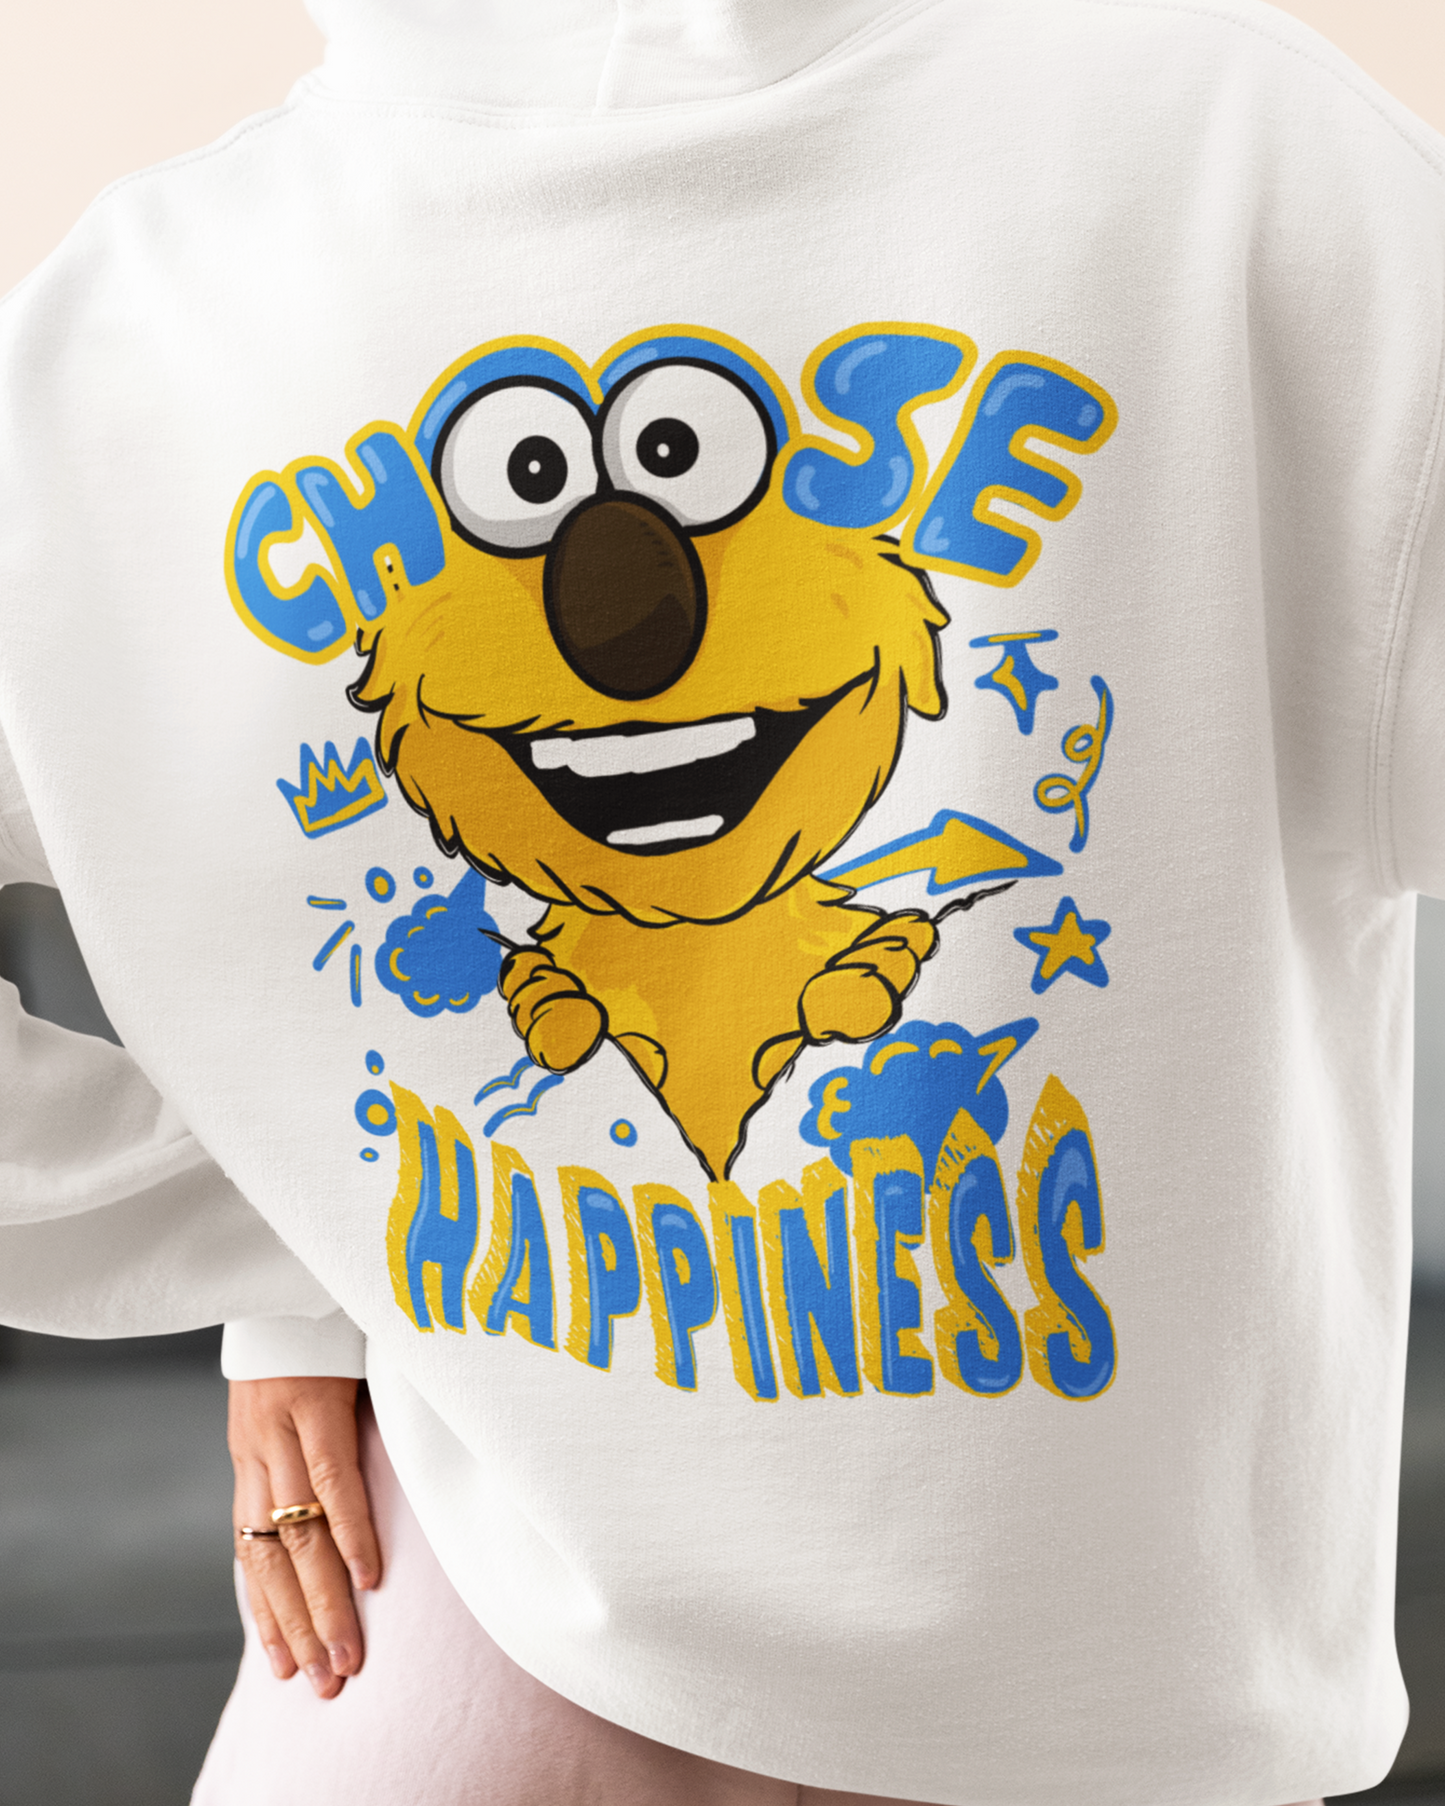 Choose Happiness Hoodie